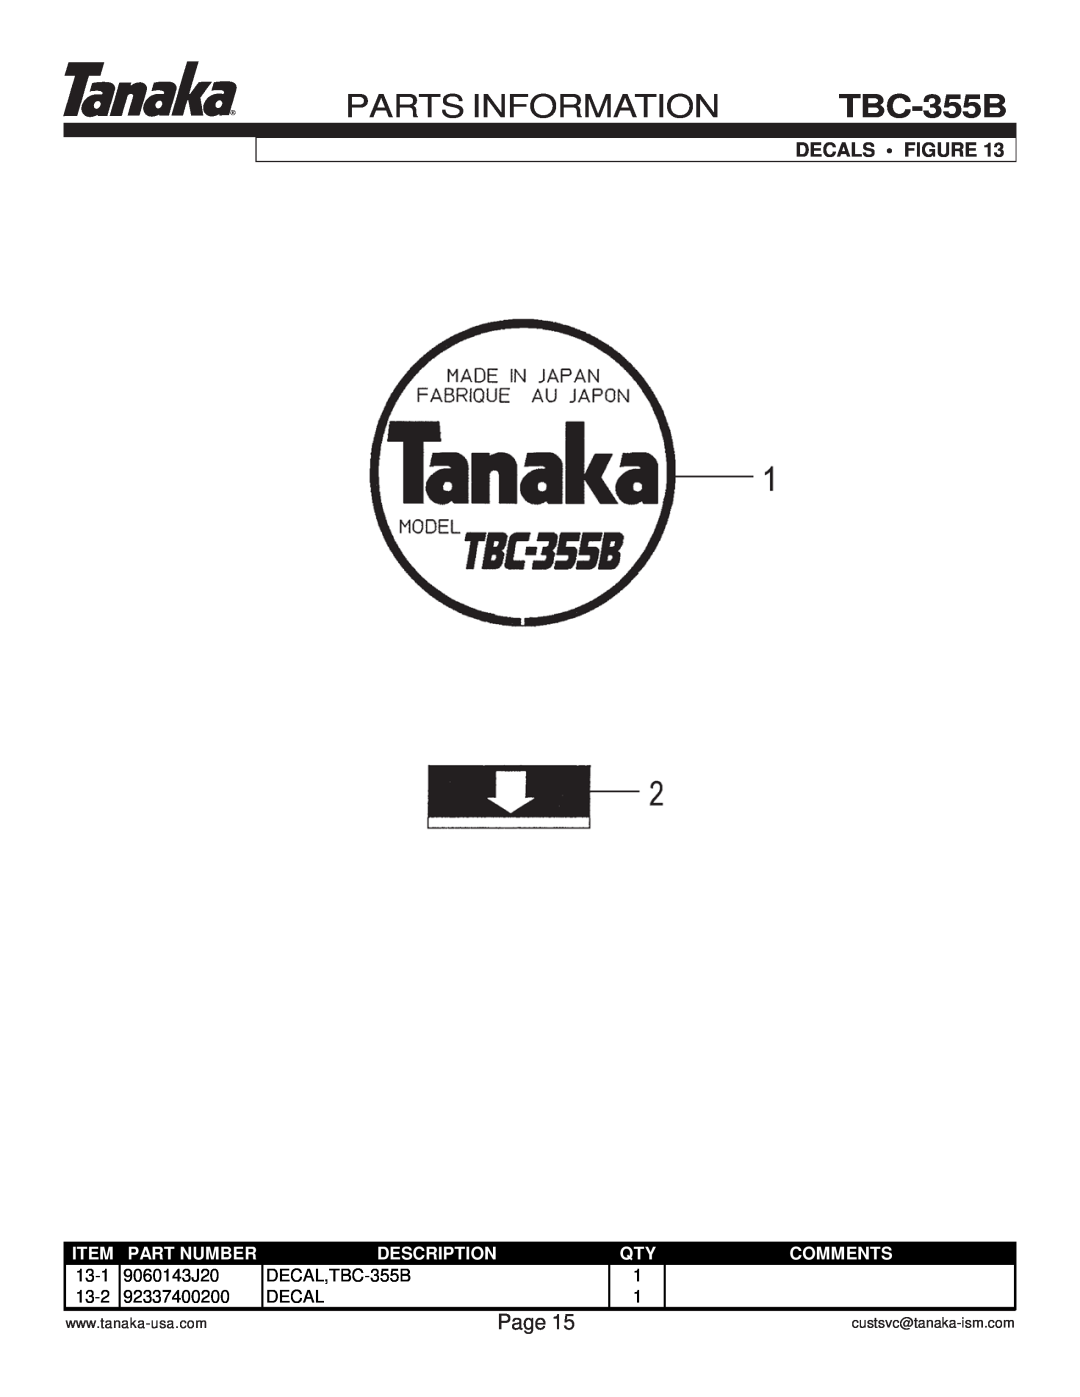 Tanaka TBC-355B Decals • Figure, Parts Information, Page, Item, Part Number, Description, Comments, custsvc@tanaka-ism.com 